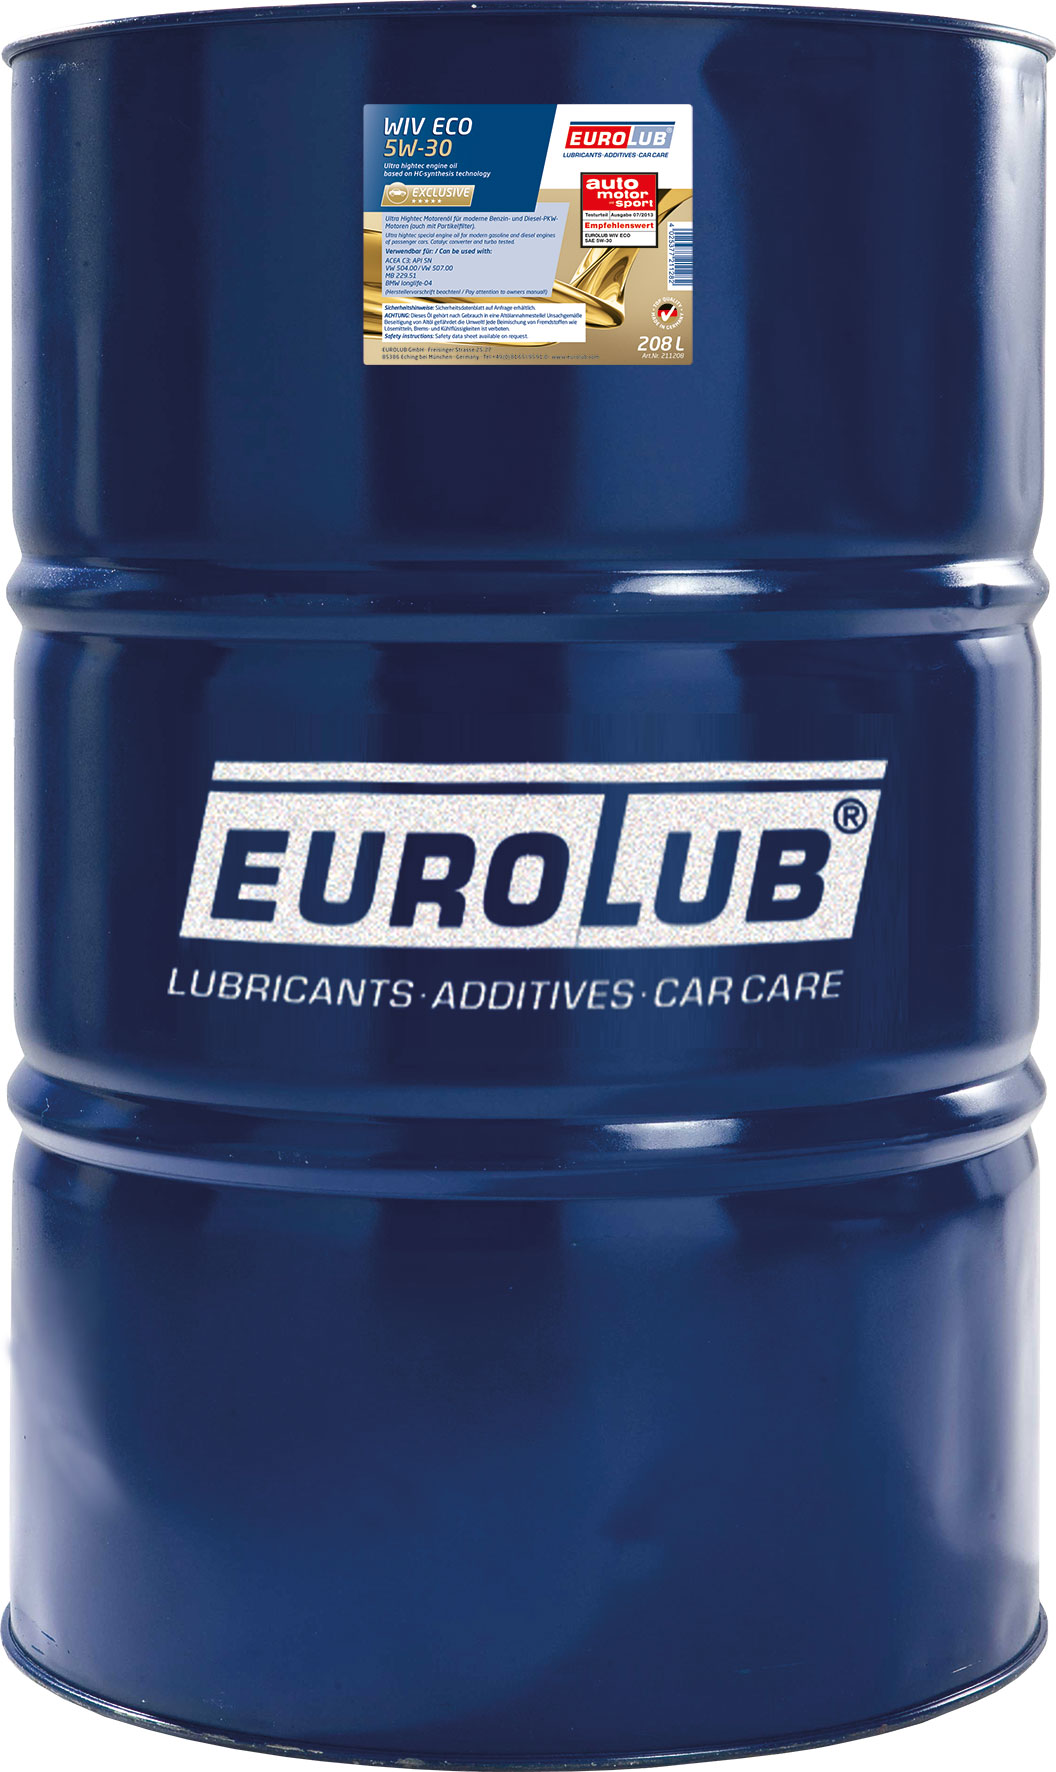 5W-30 Eurolub WIV ECO Motoröl 208 Liter